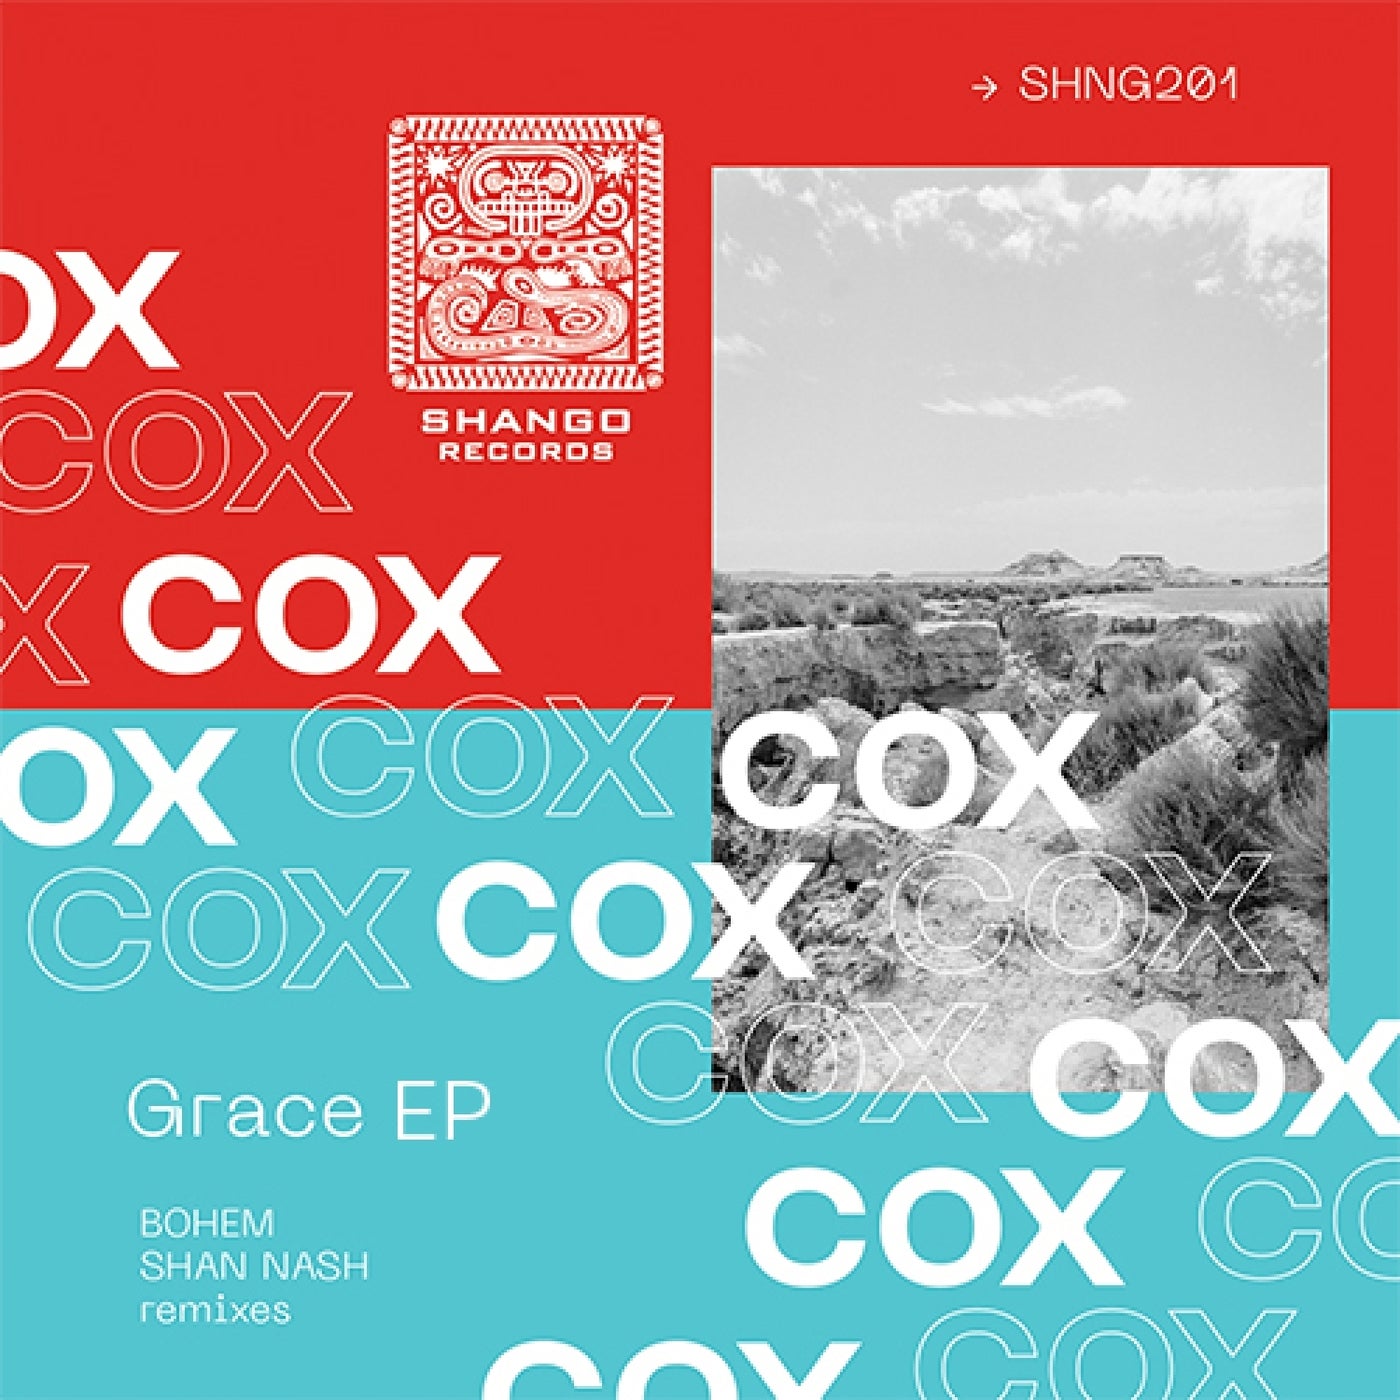 Cox (EG) - Grace EP [SHNG201]